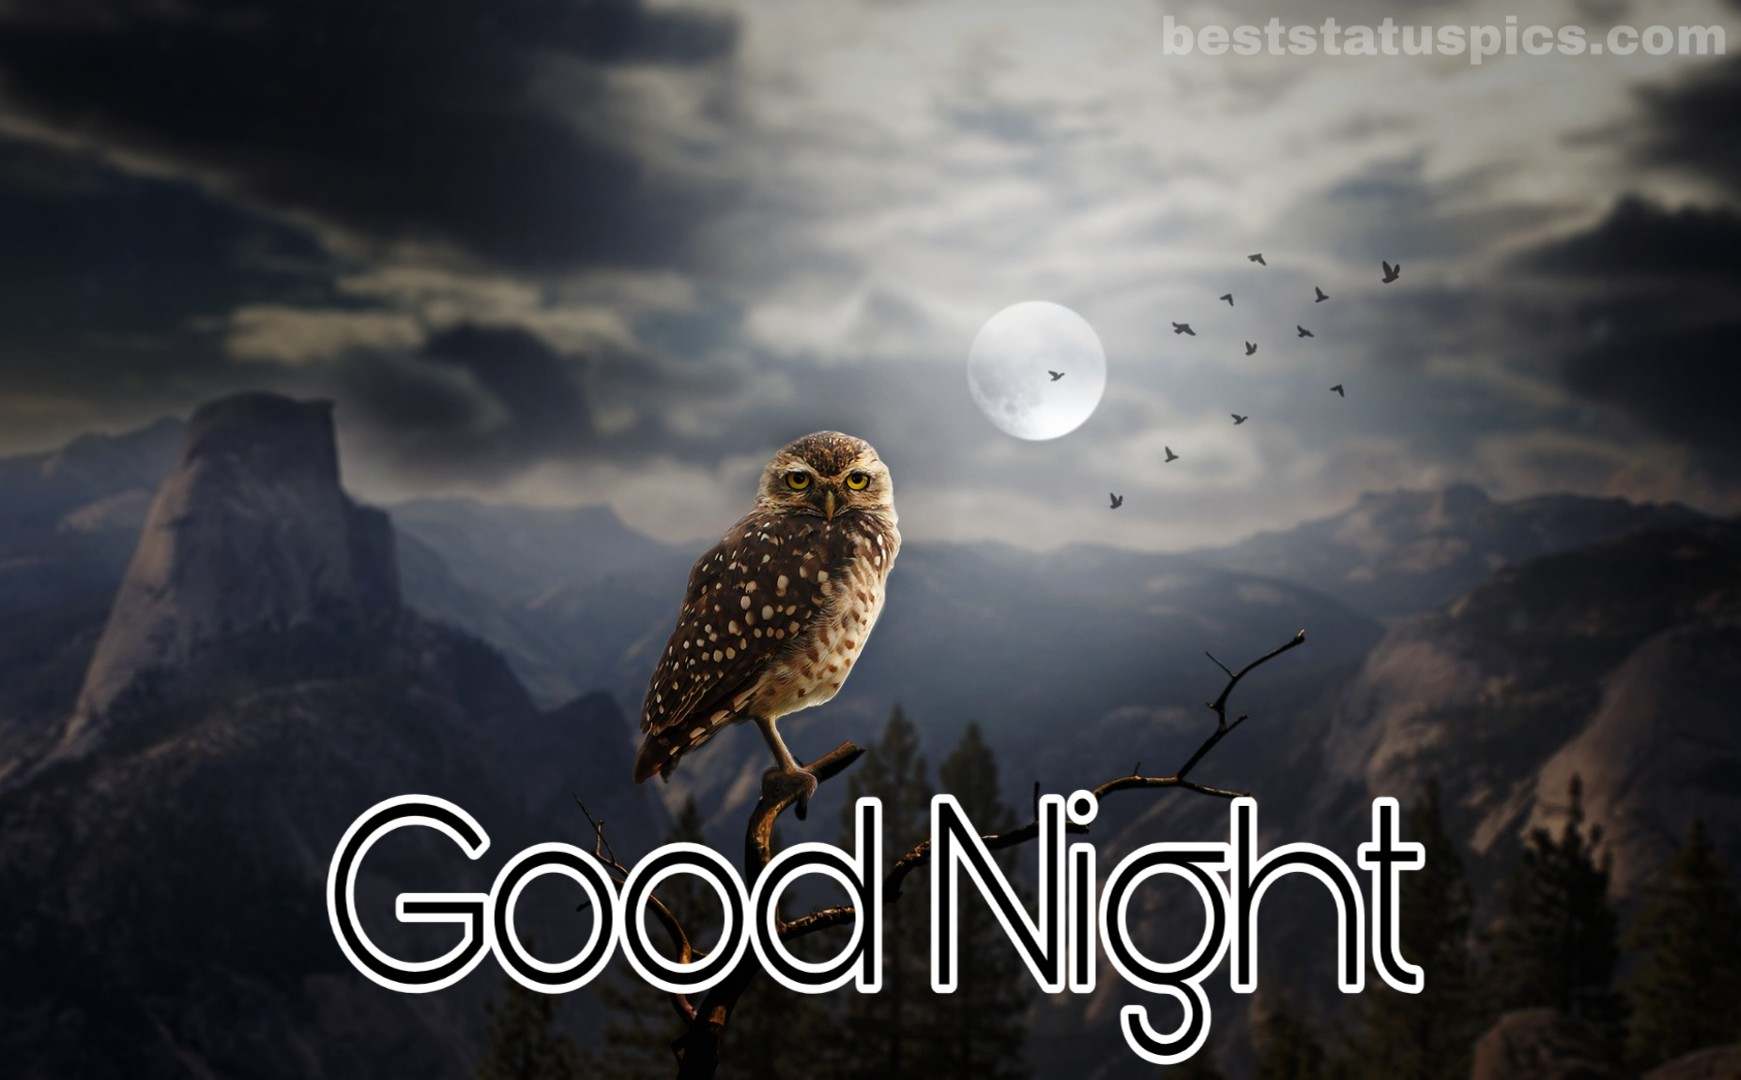 299+ Good Night Sweet Dreams Nature Images HD [2022] - Best Status ...